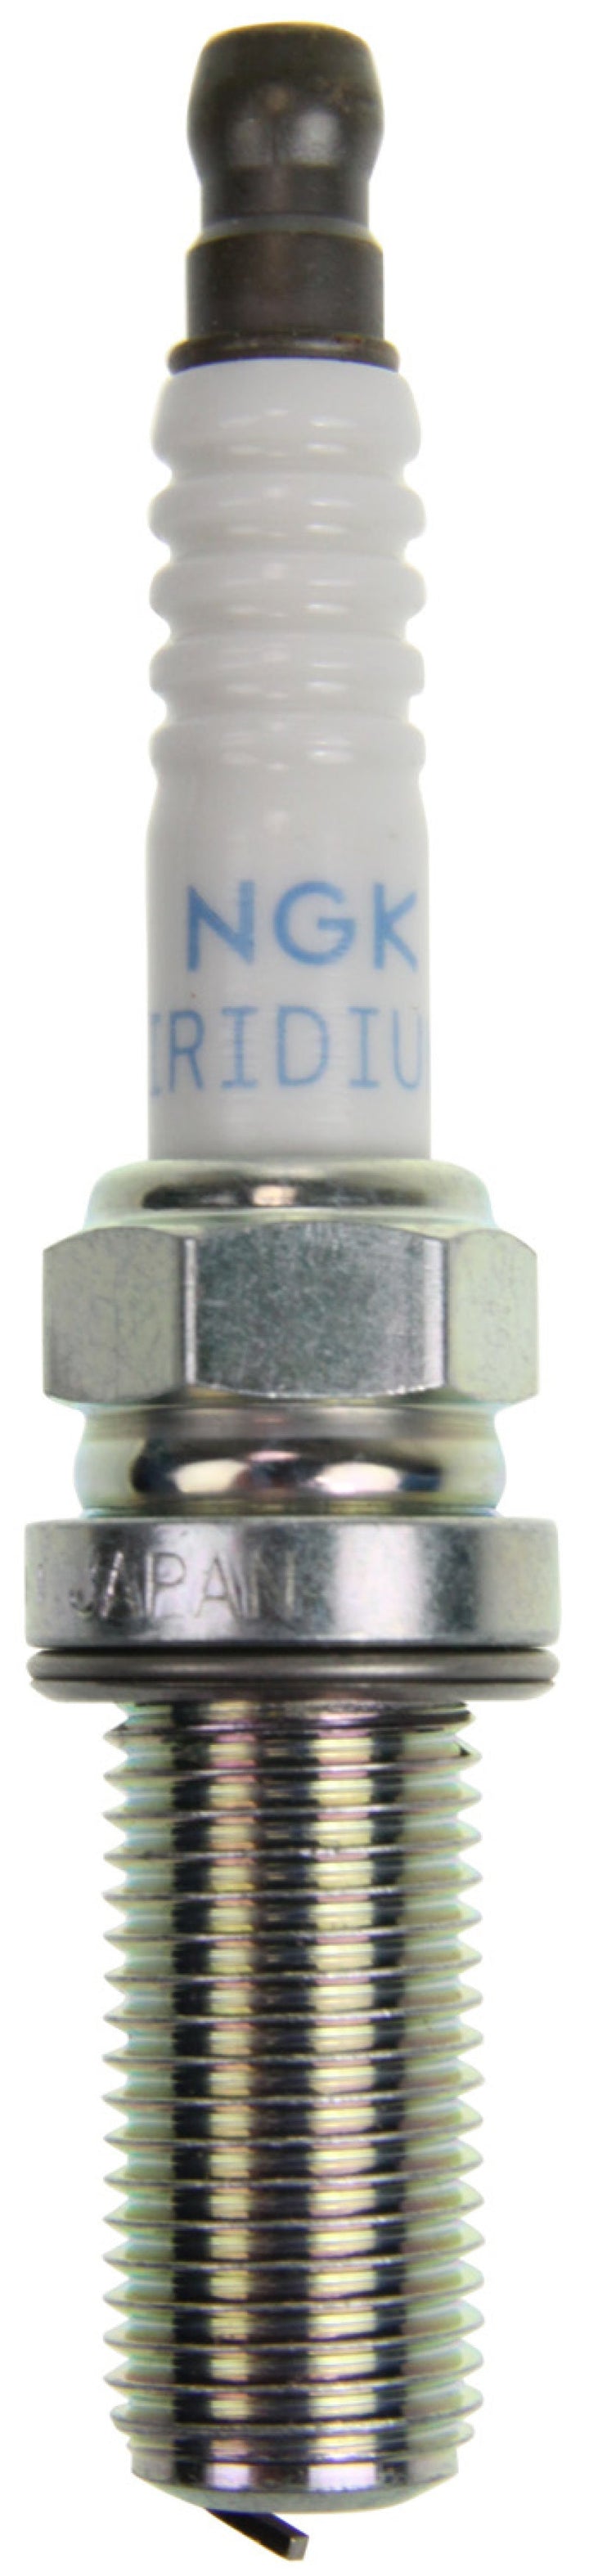 NGK Iridium Racing Spark Plug Box of 4 (R2558E-10) - Premium Spark Plugs from NGK - Just 598.46 SR! Shop now at Motors